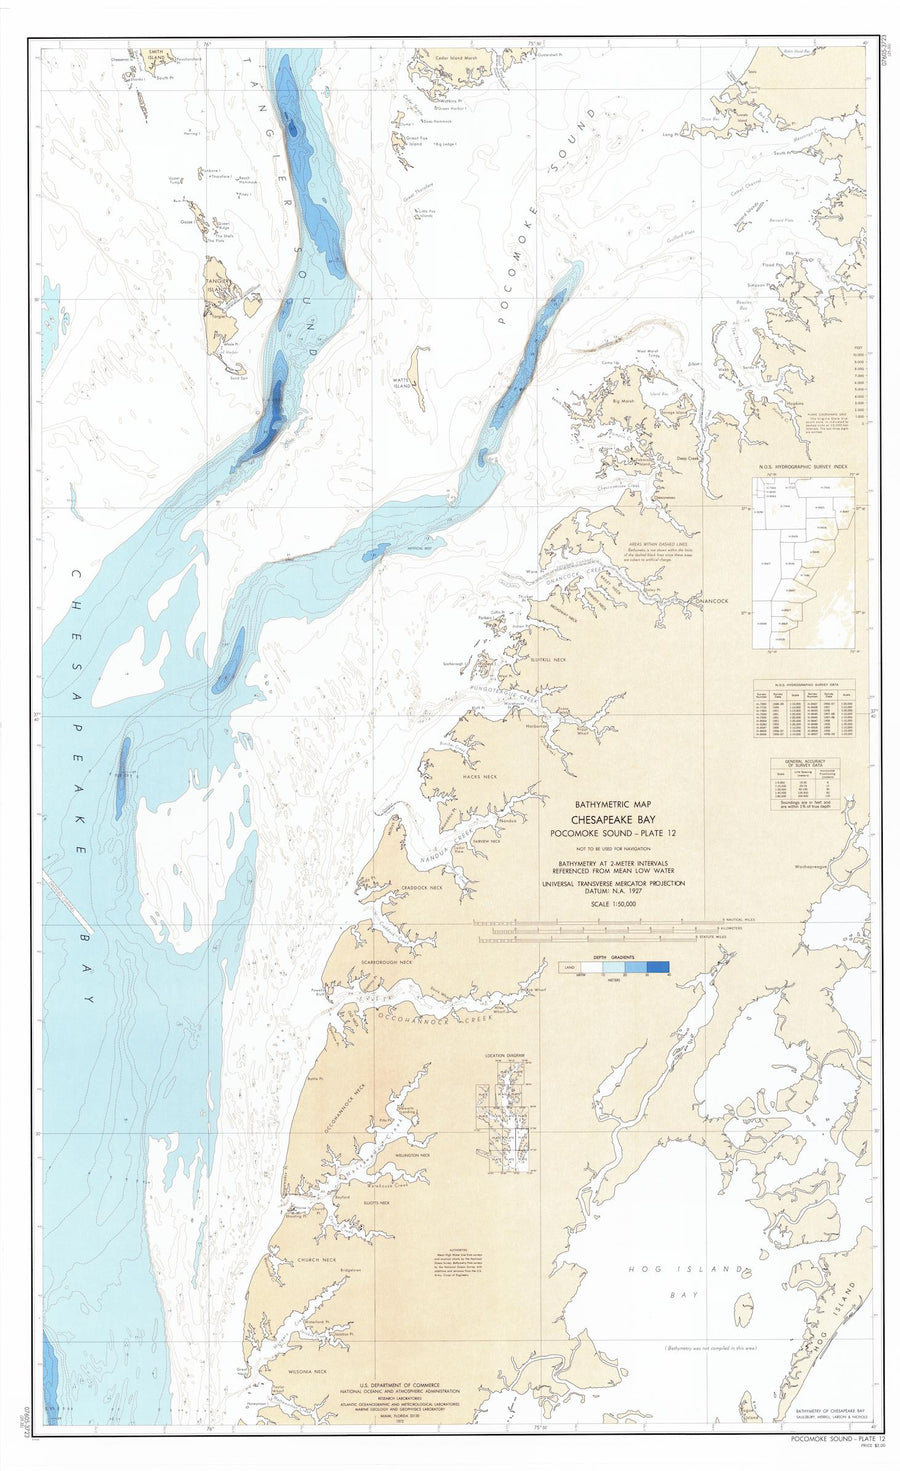 Chesapeake Bay Pocomoke Sound Bathymetric Map - PLATE 12